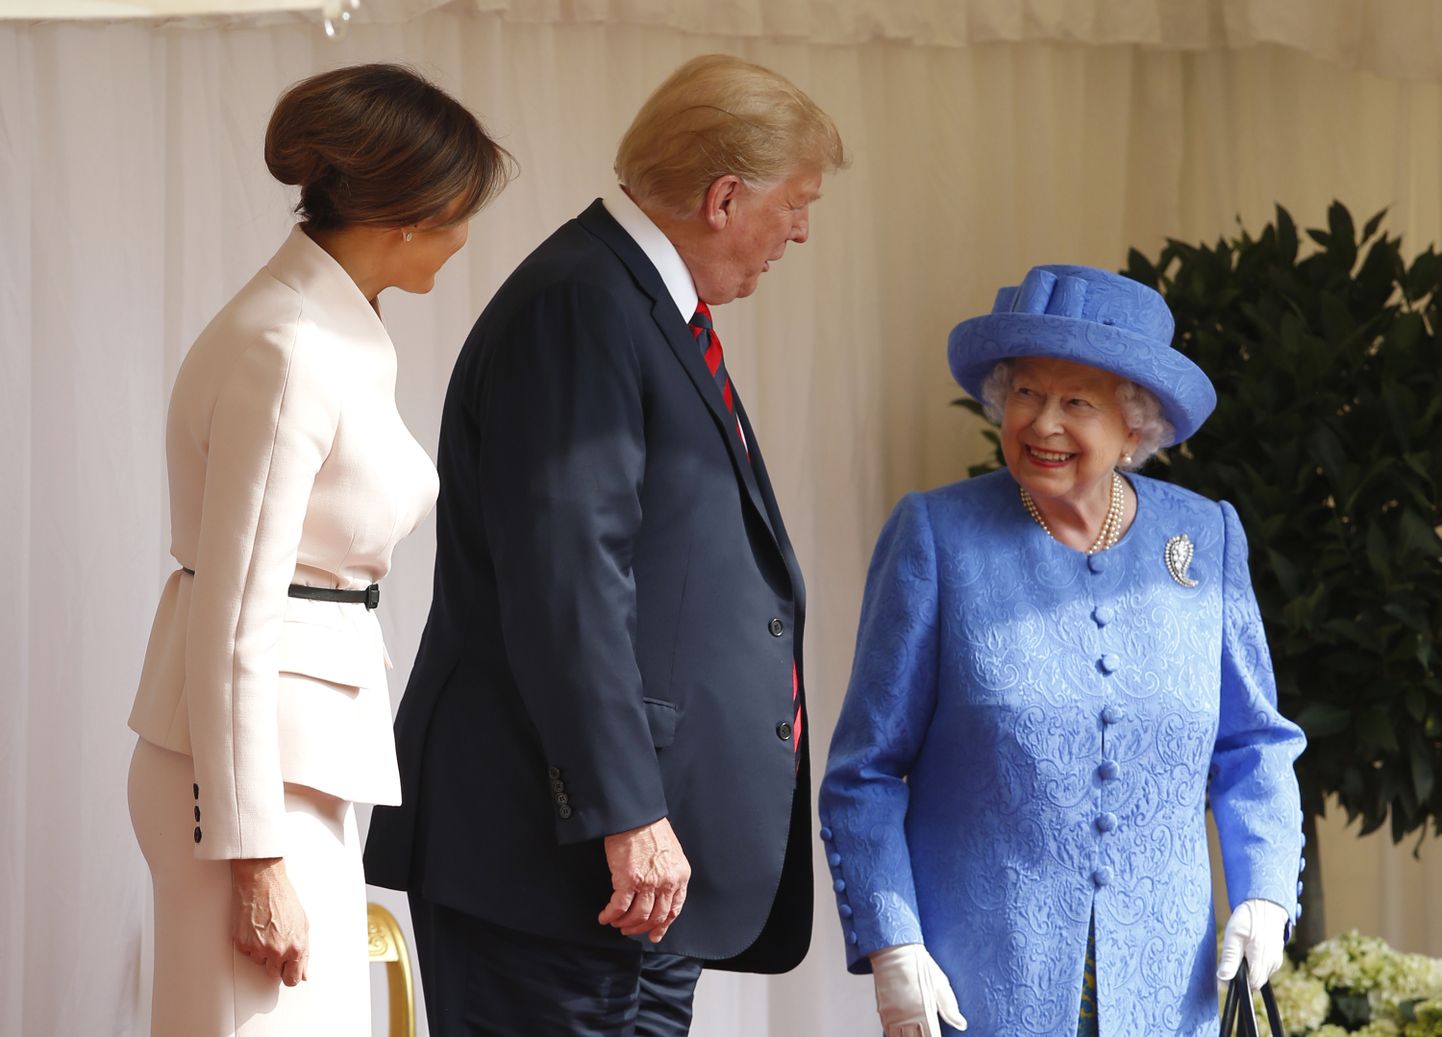 Kuninganna koos presidendipaariga